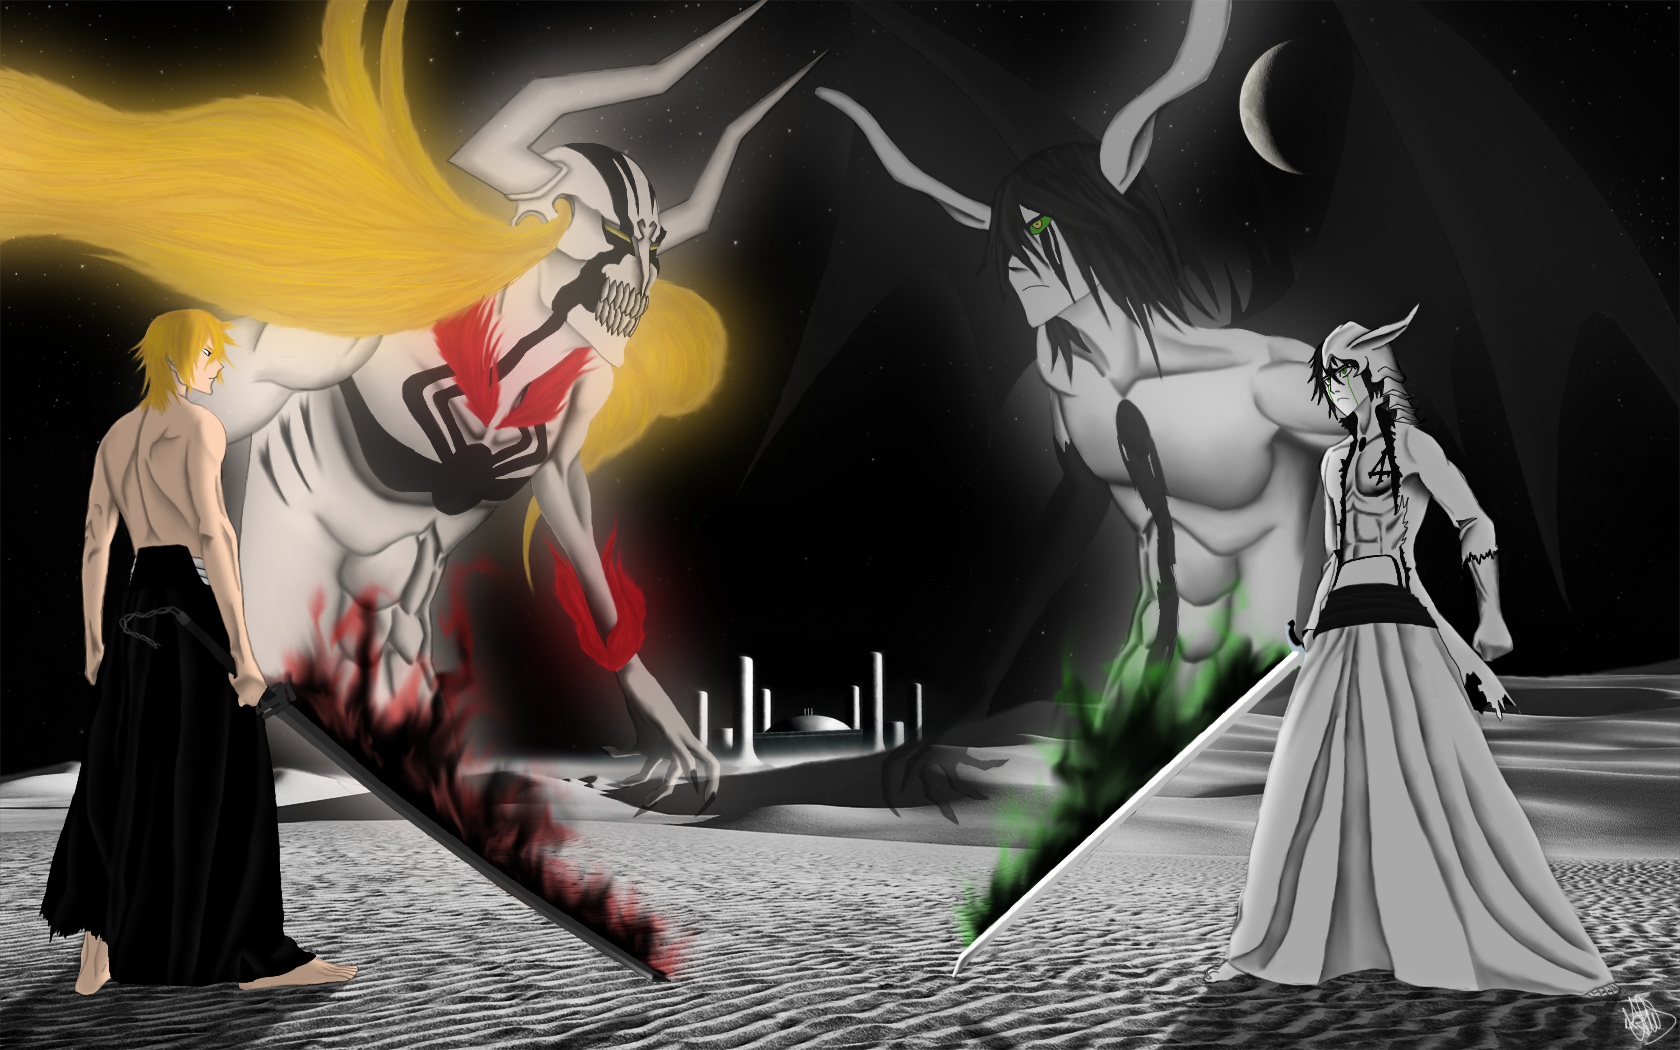 Vasto Lorde Ichigo VS The World - Battles - Comic Vine